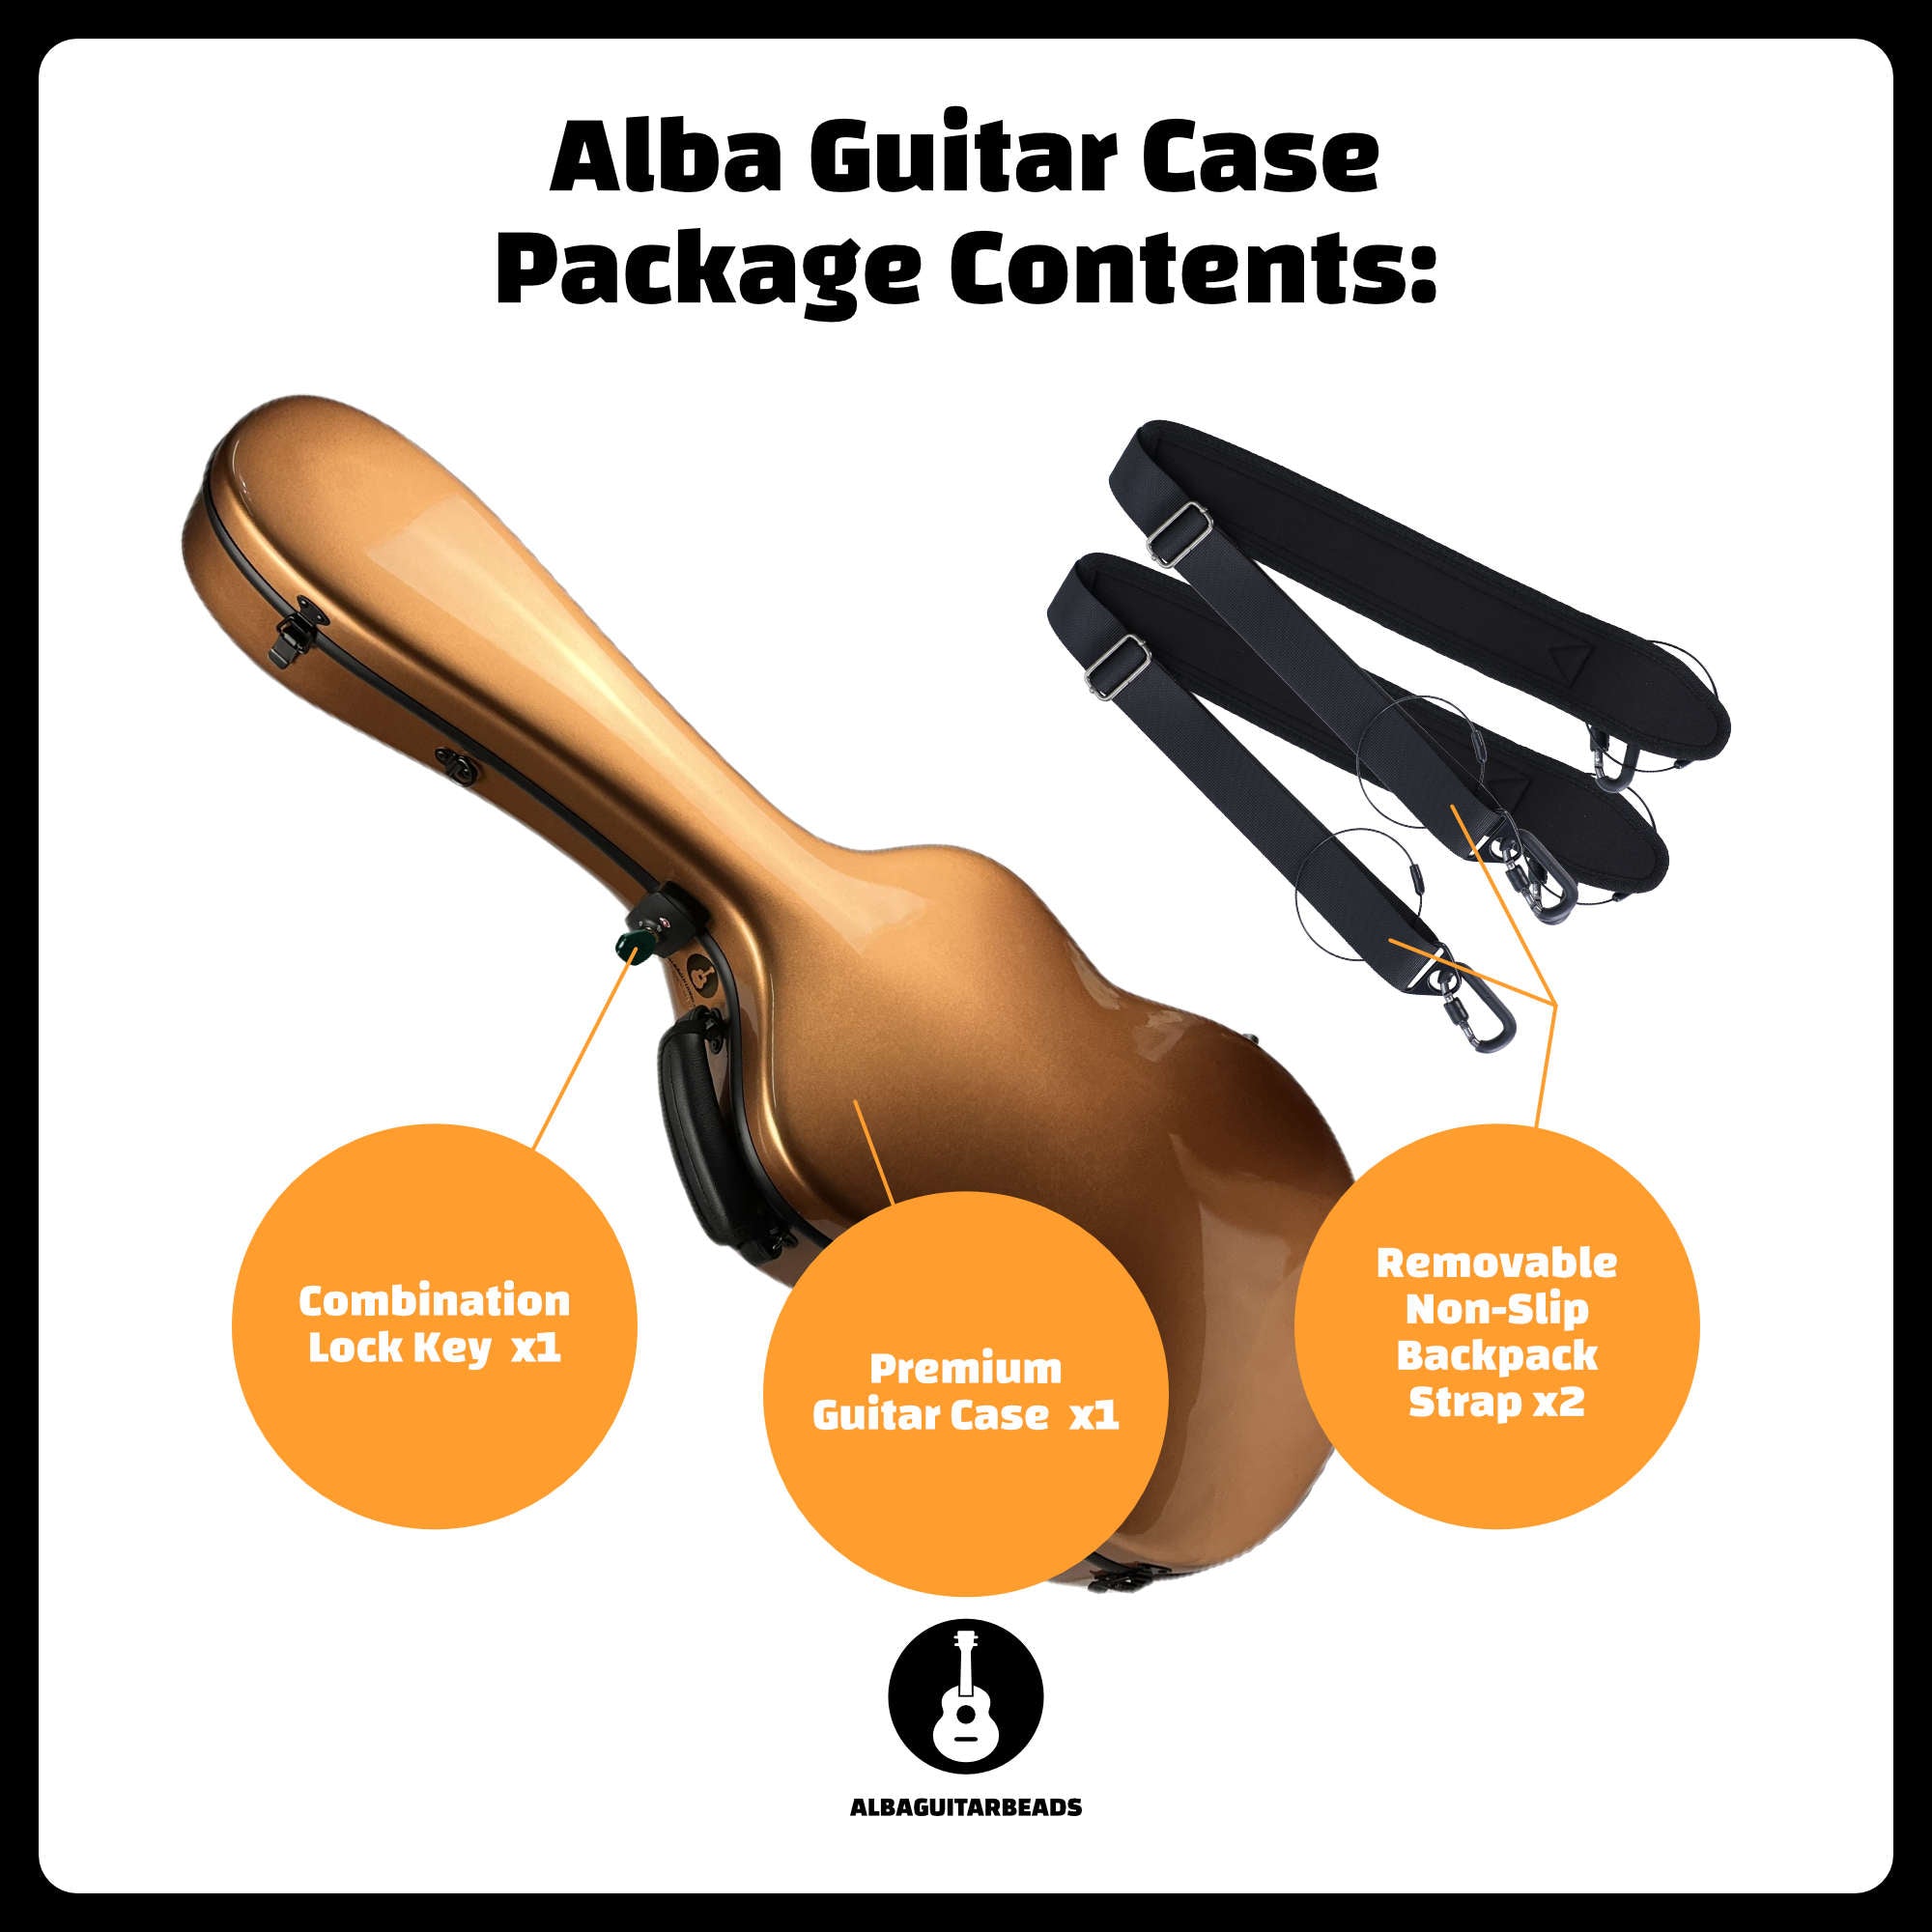 Carbon Alba Guitar Case Gold Gloss for Classical Guitar Acoustic, Flamenco guitar case